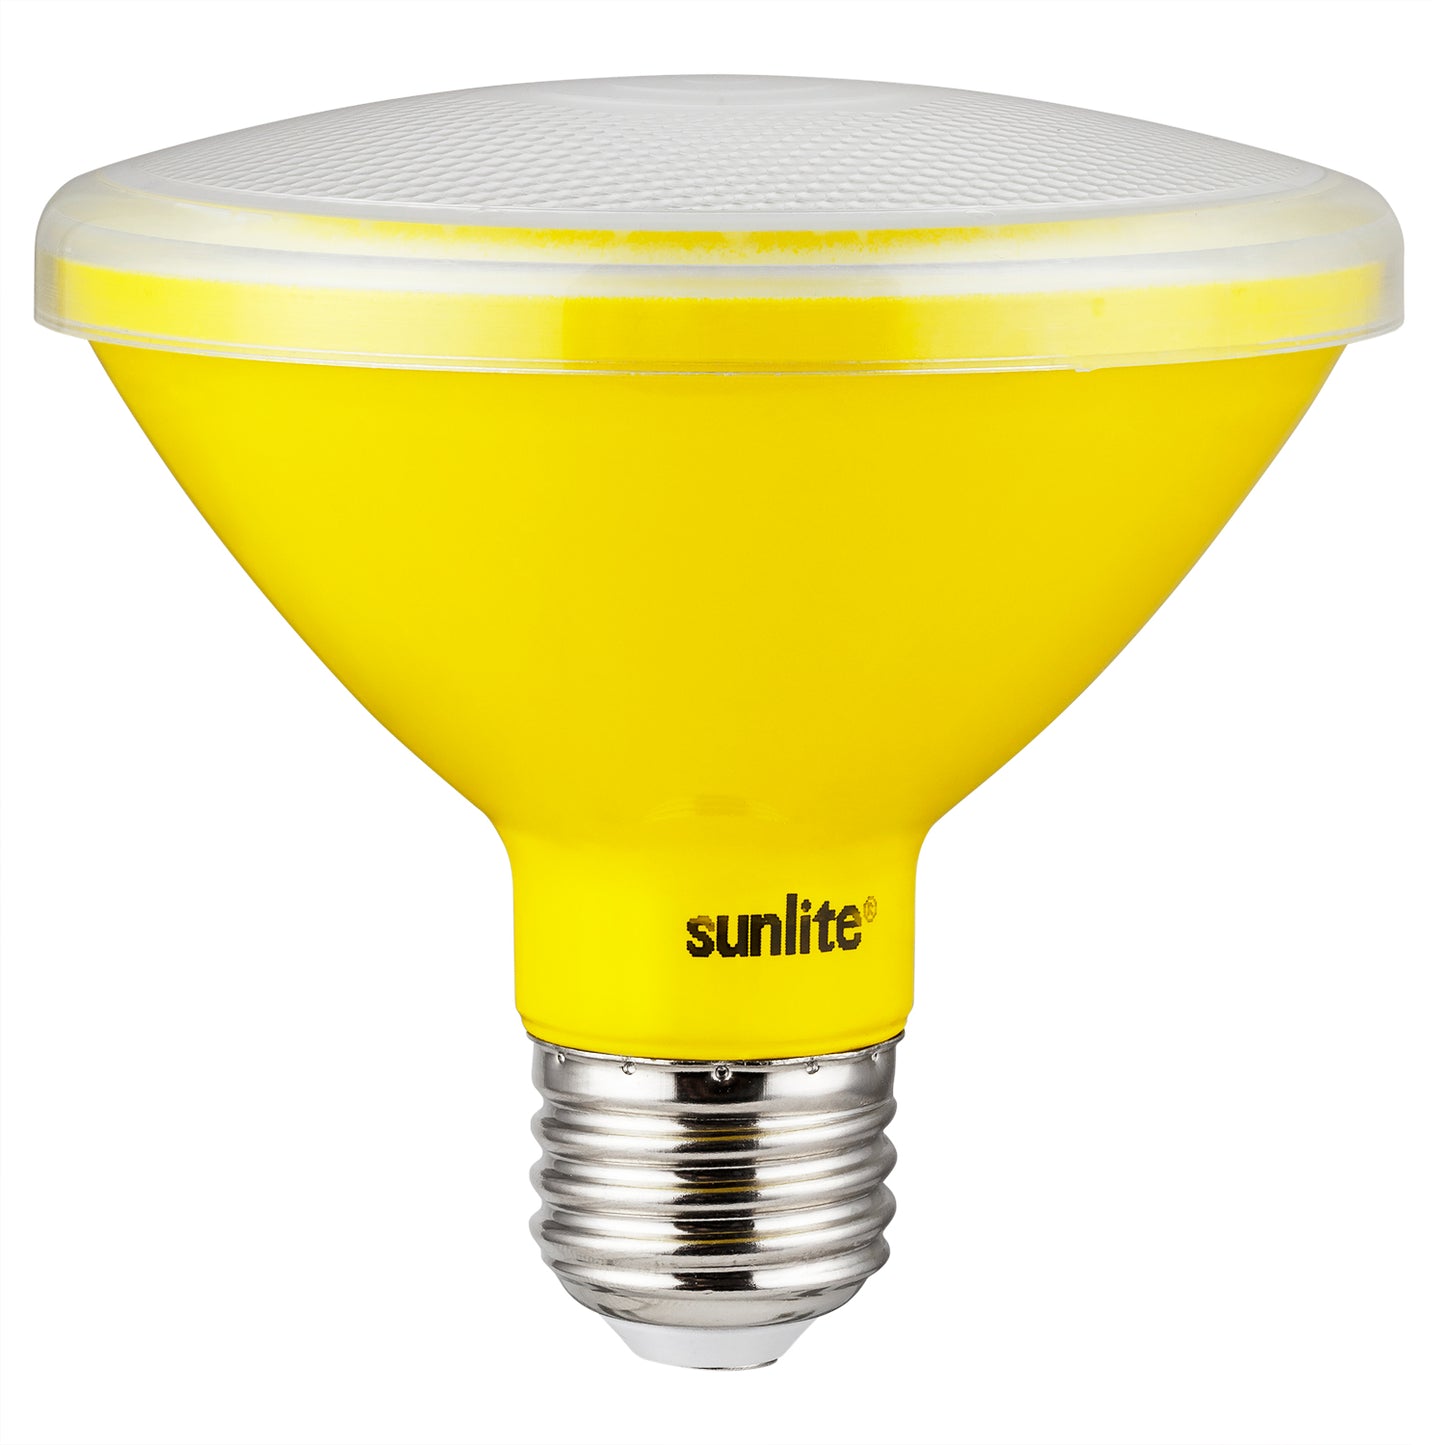 Sunlite 81471 LED PAR30 Short Neck Colored Recessed Bug Light Bulb, 8 watt (75w Equivalent), Medium (E26) Base, Floodlight, ETL Listed, Yellow, 1 pack